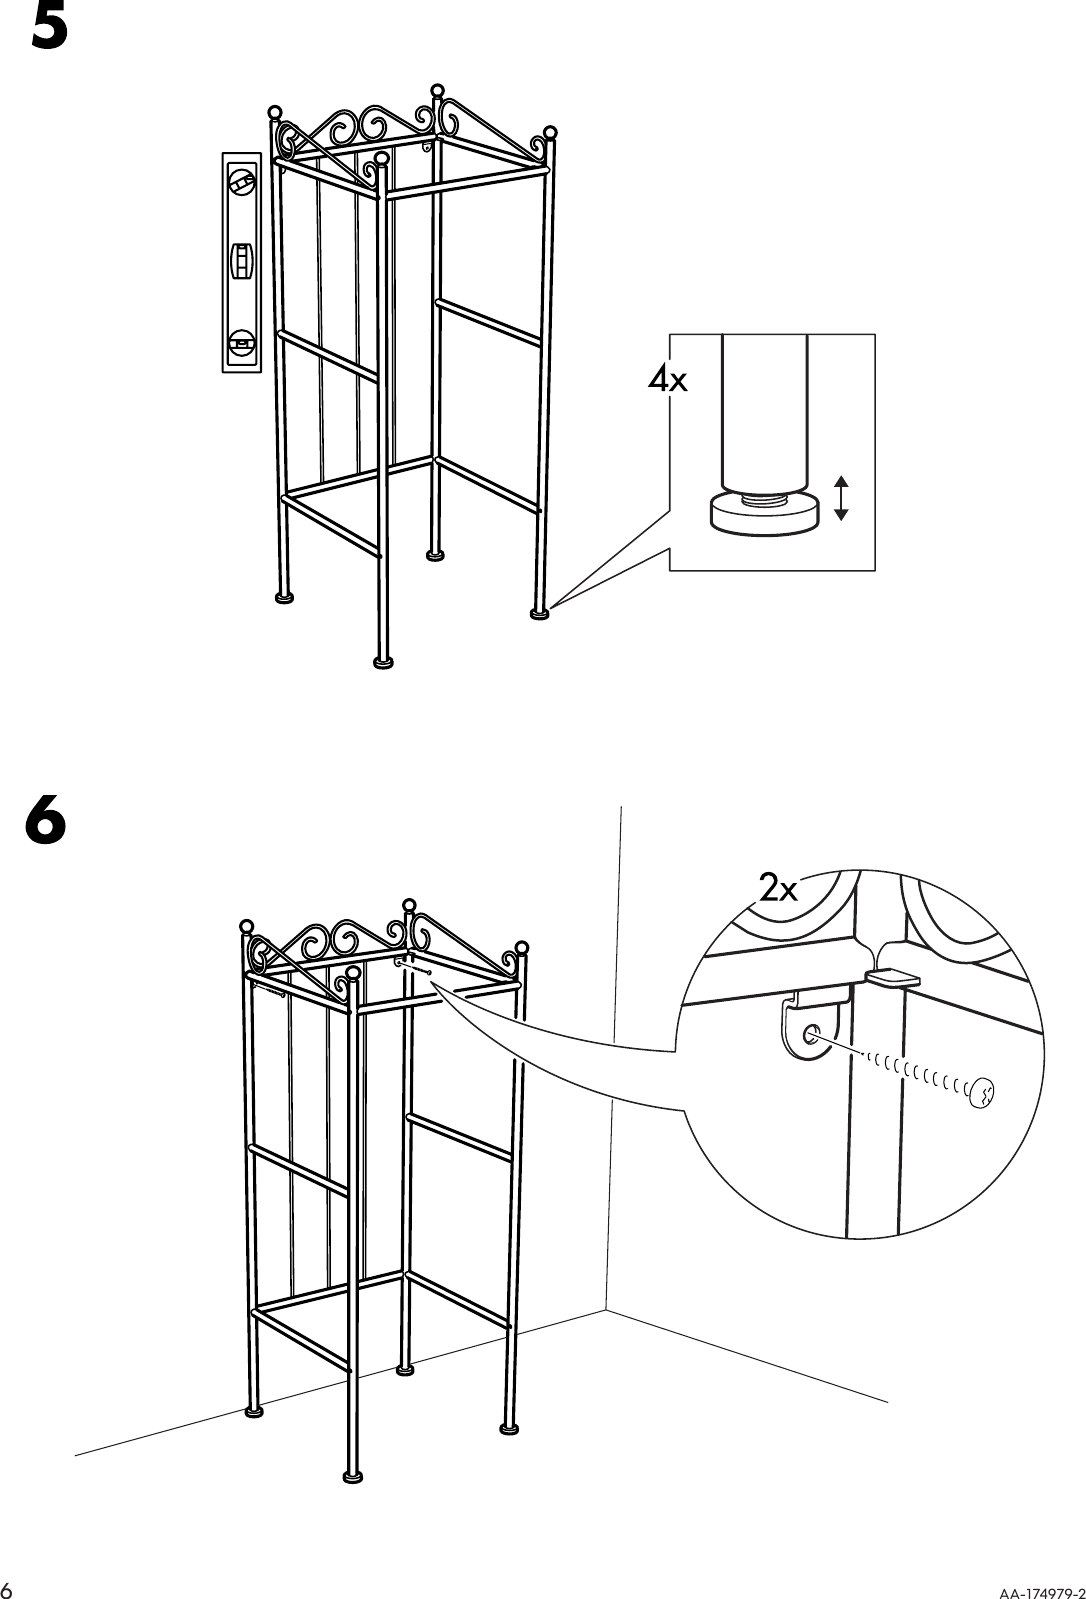 Page 6 of 8 - Ikea Ikea-Rannskar-Shelving-Unit-17X41-Assembly-Instruction